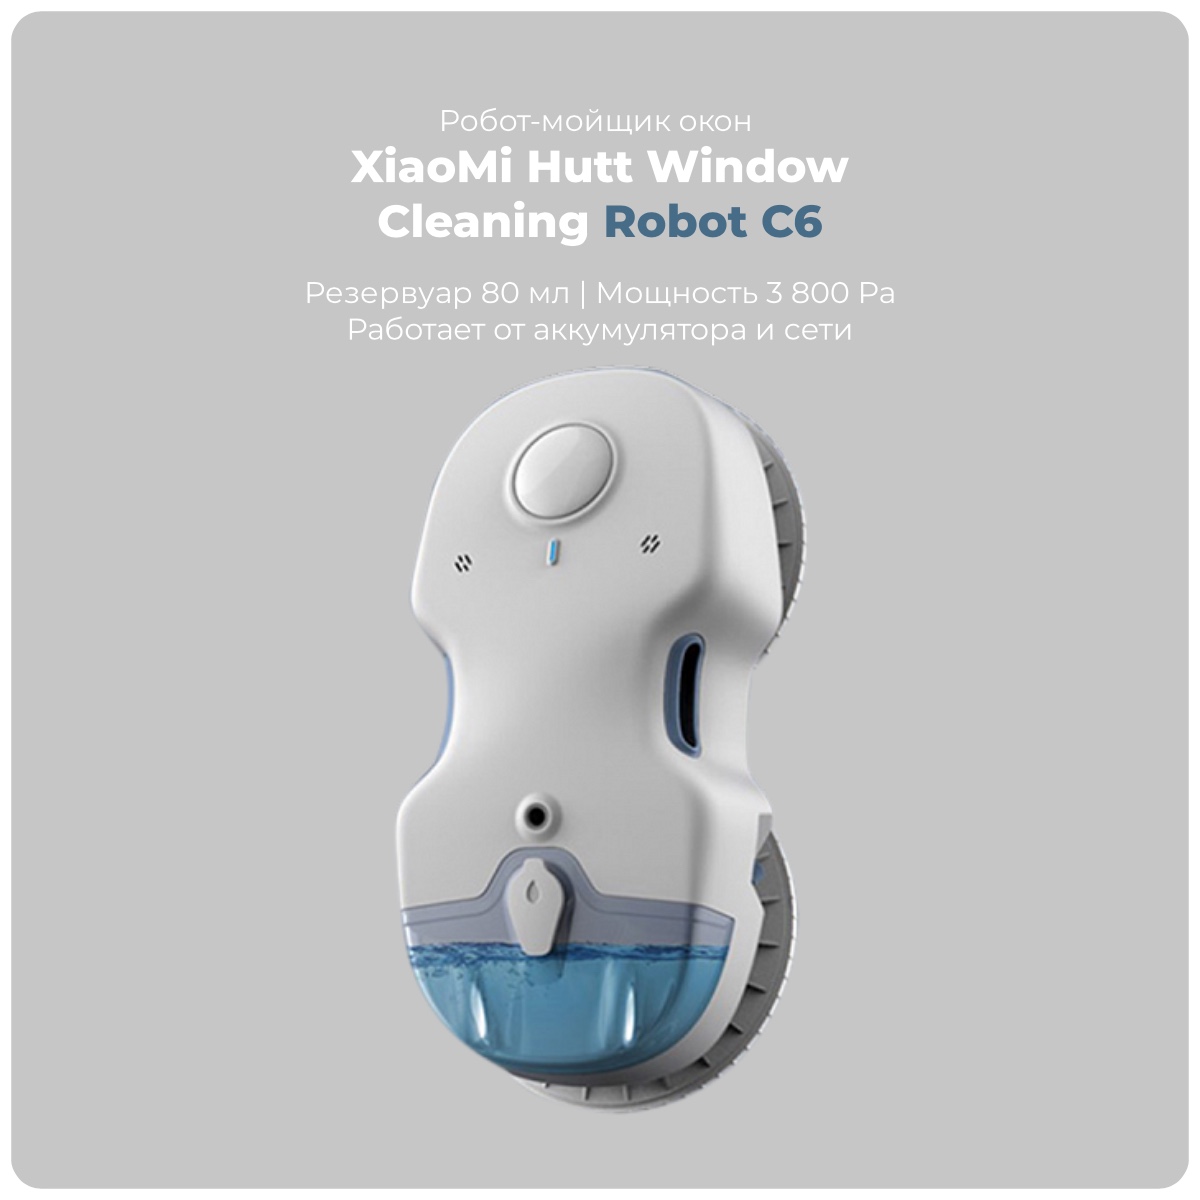 XiaoMi-Hutt-Window-Cleaning-Robot-C6-01